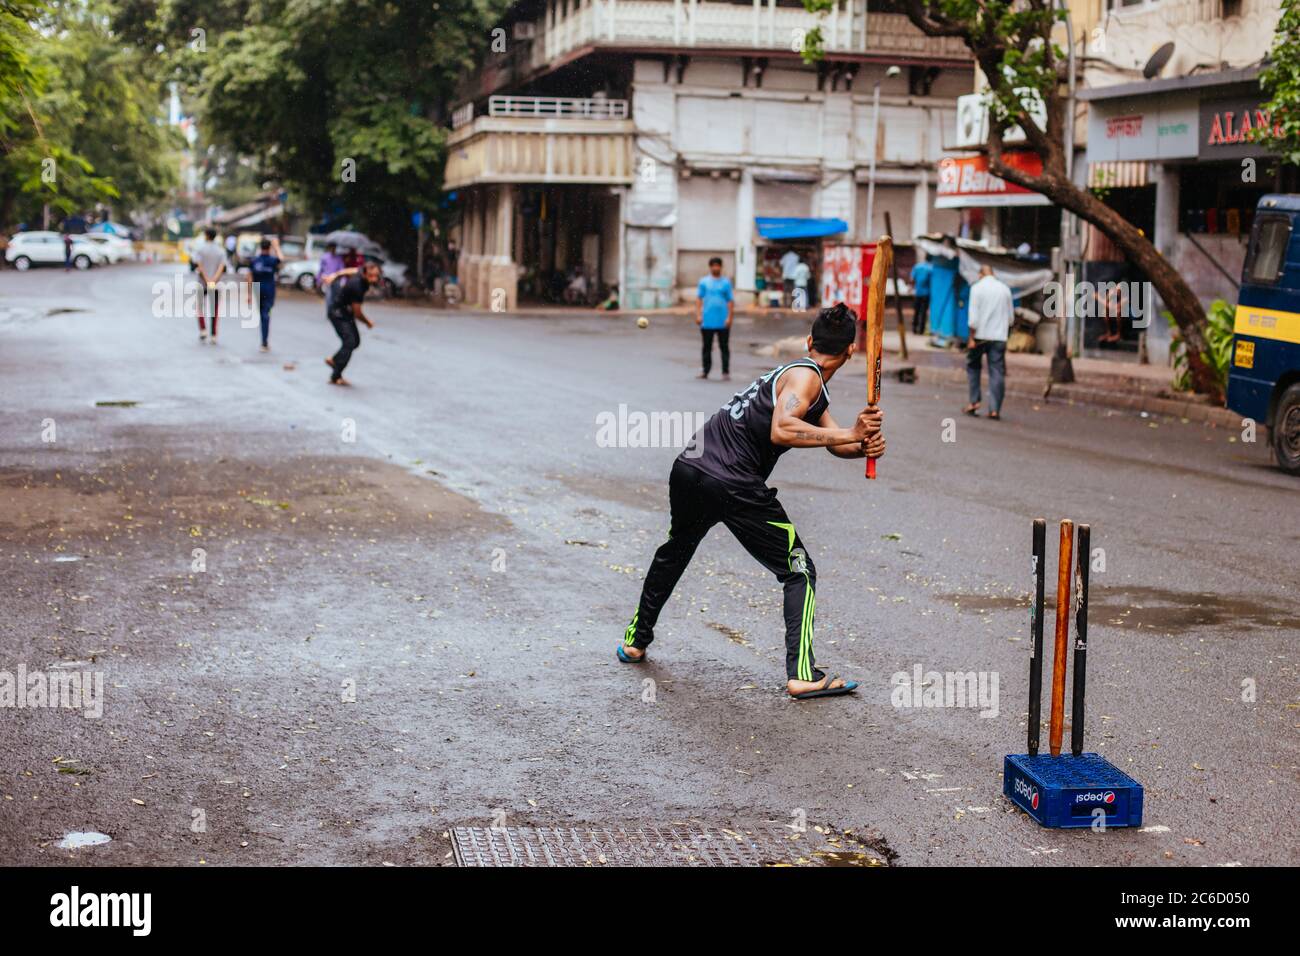 Street Cricket in Mumbai India Stock Photo